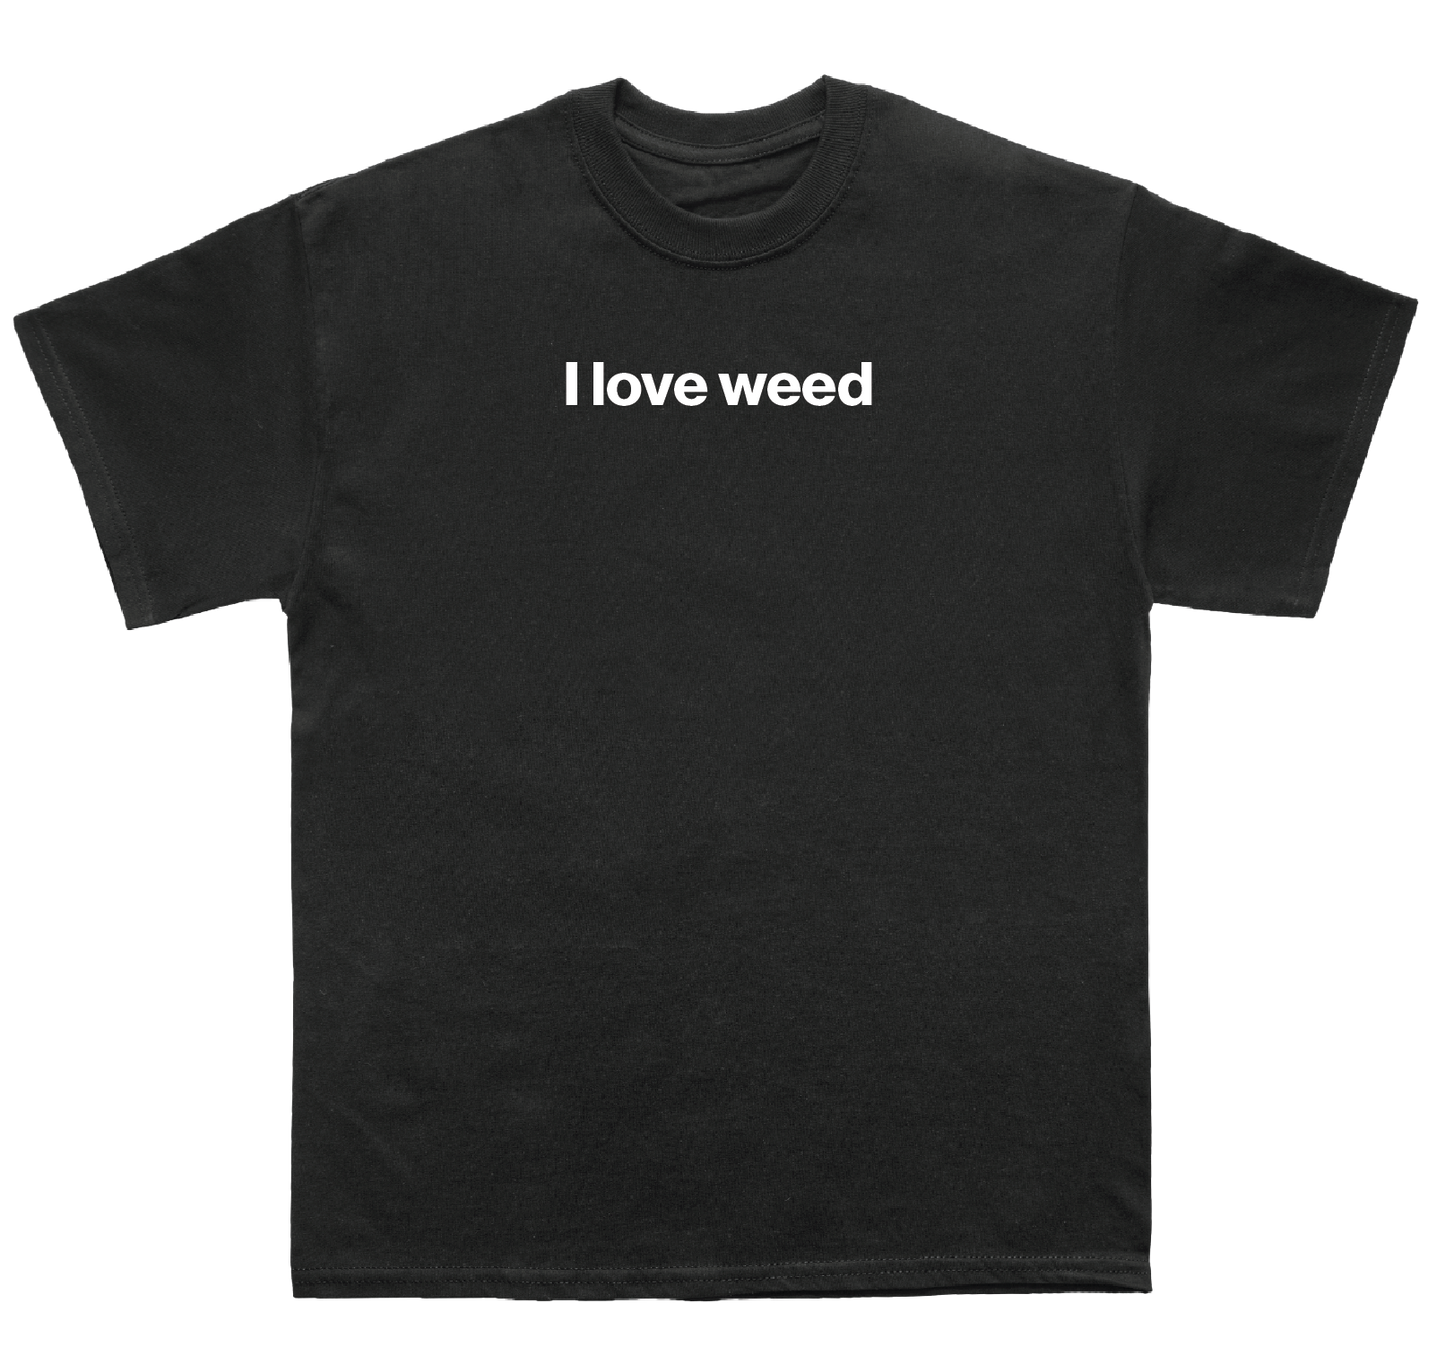 I love weed shirt